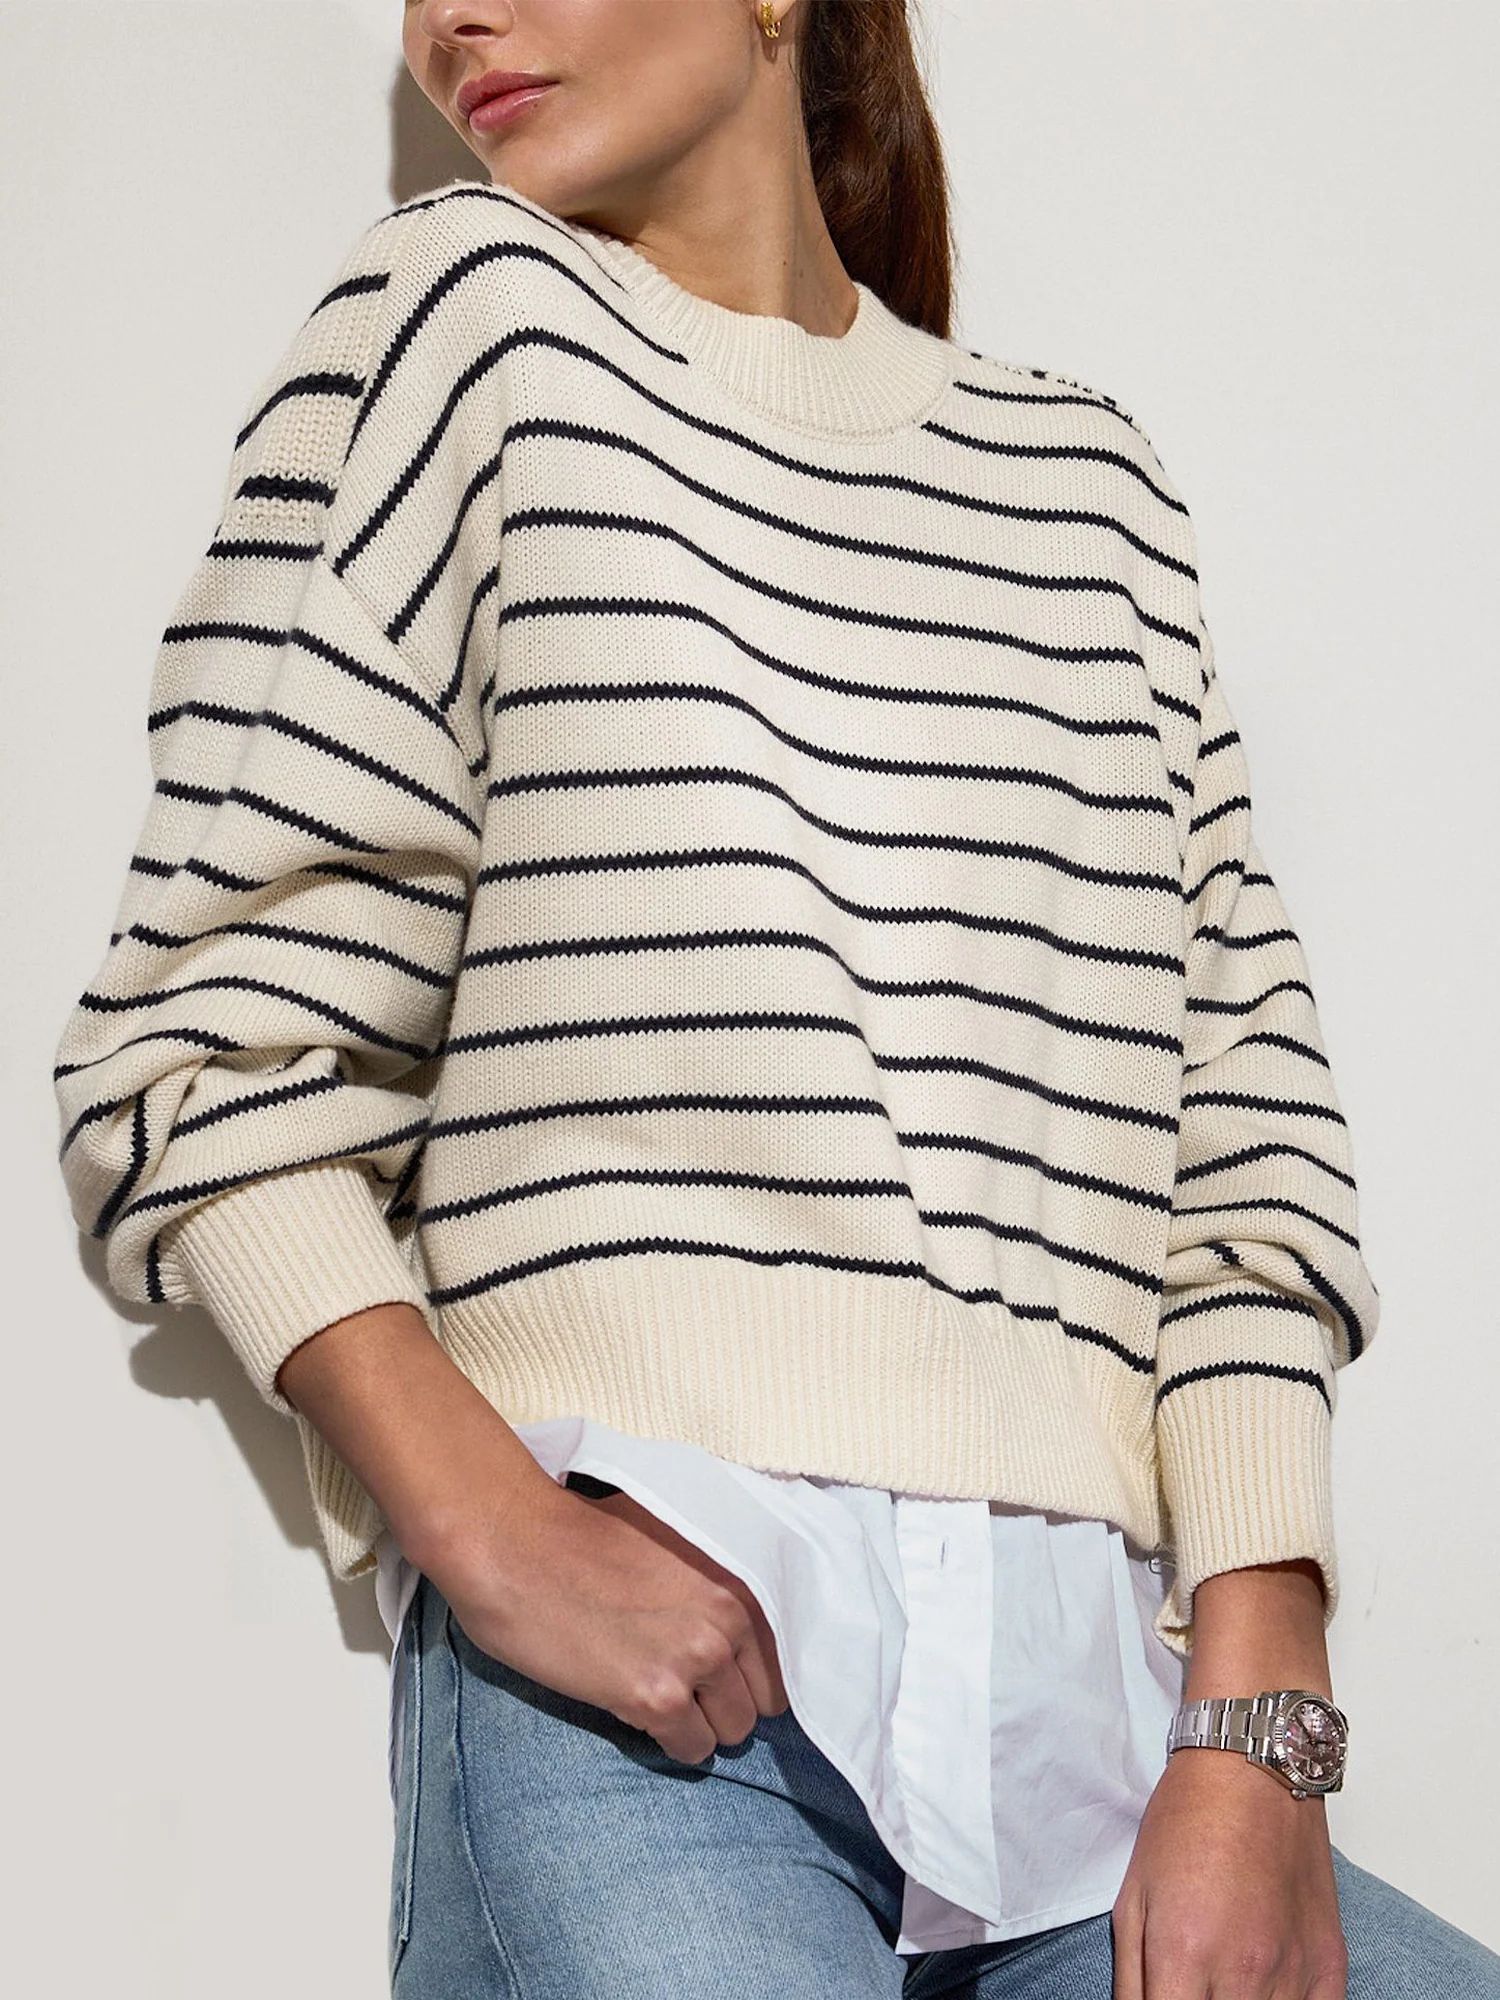 Layered-Look Sweater, Striped, Ivory, Charcoal, Crew | Brochu Walker